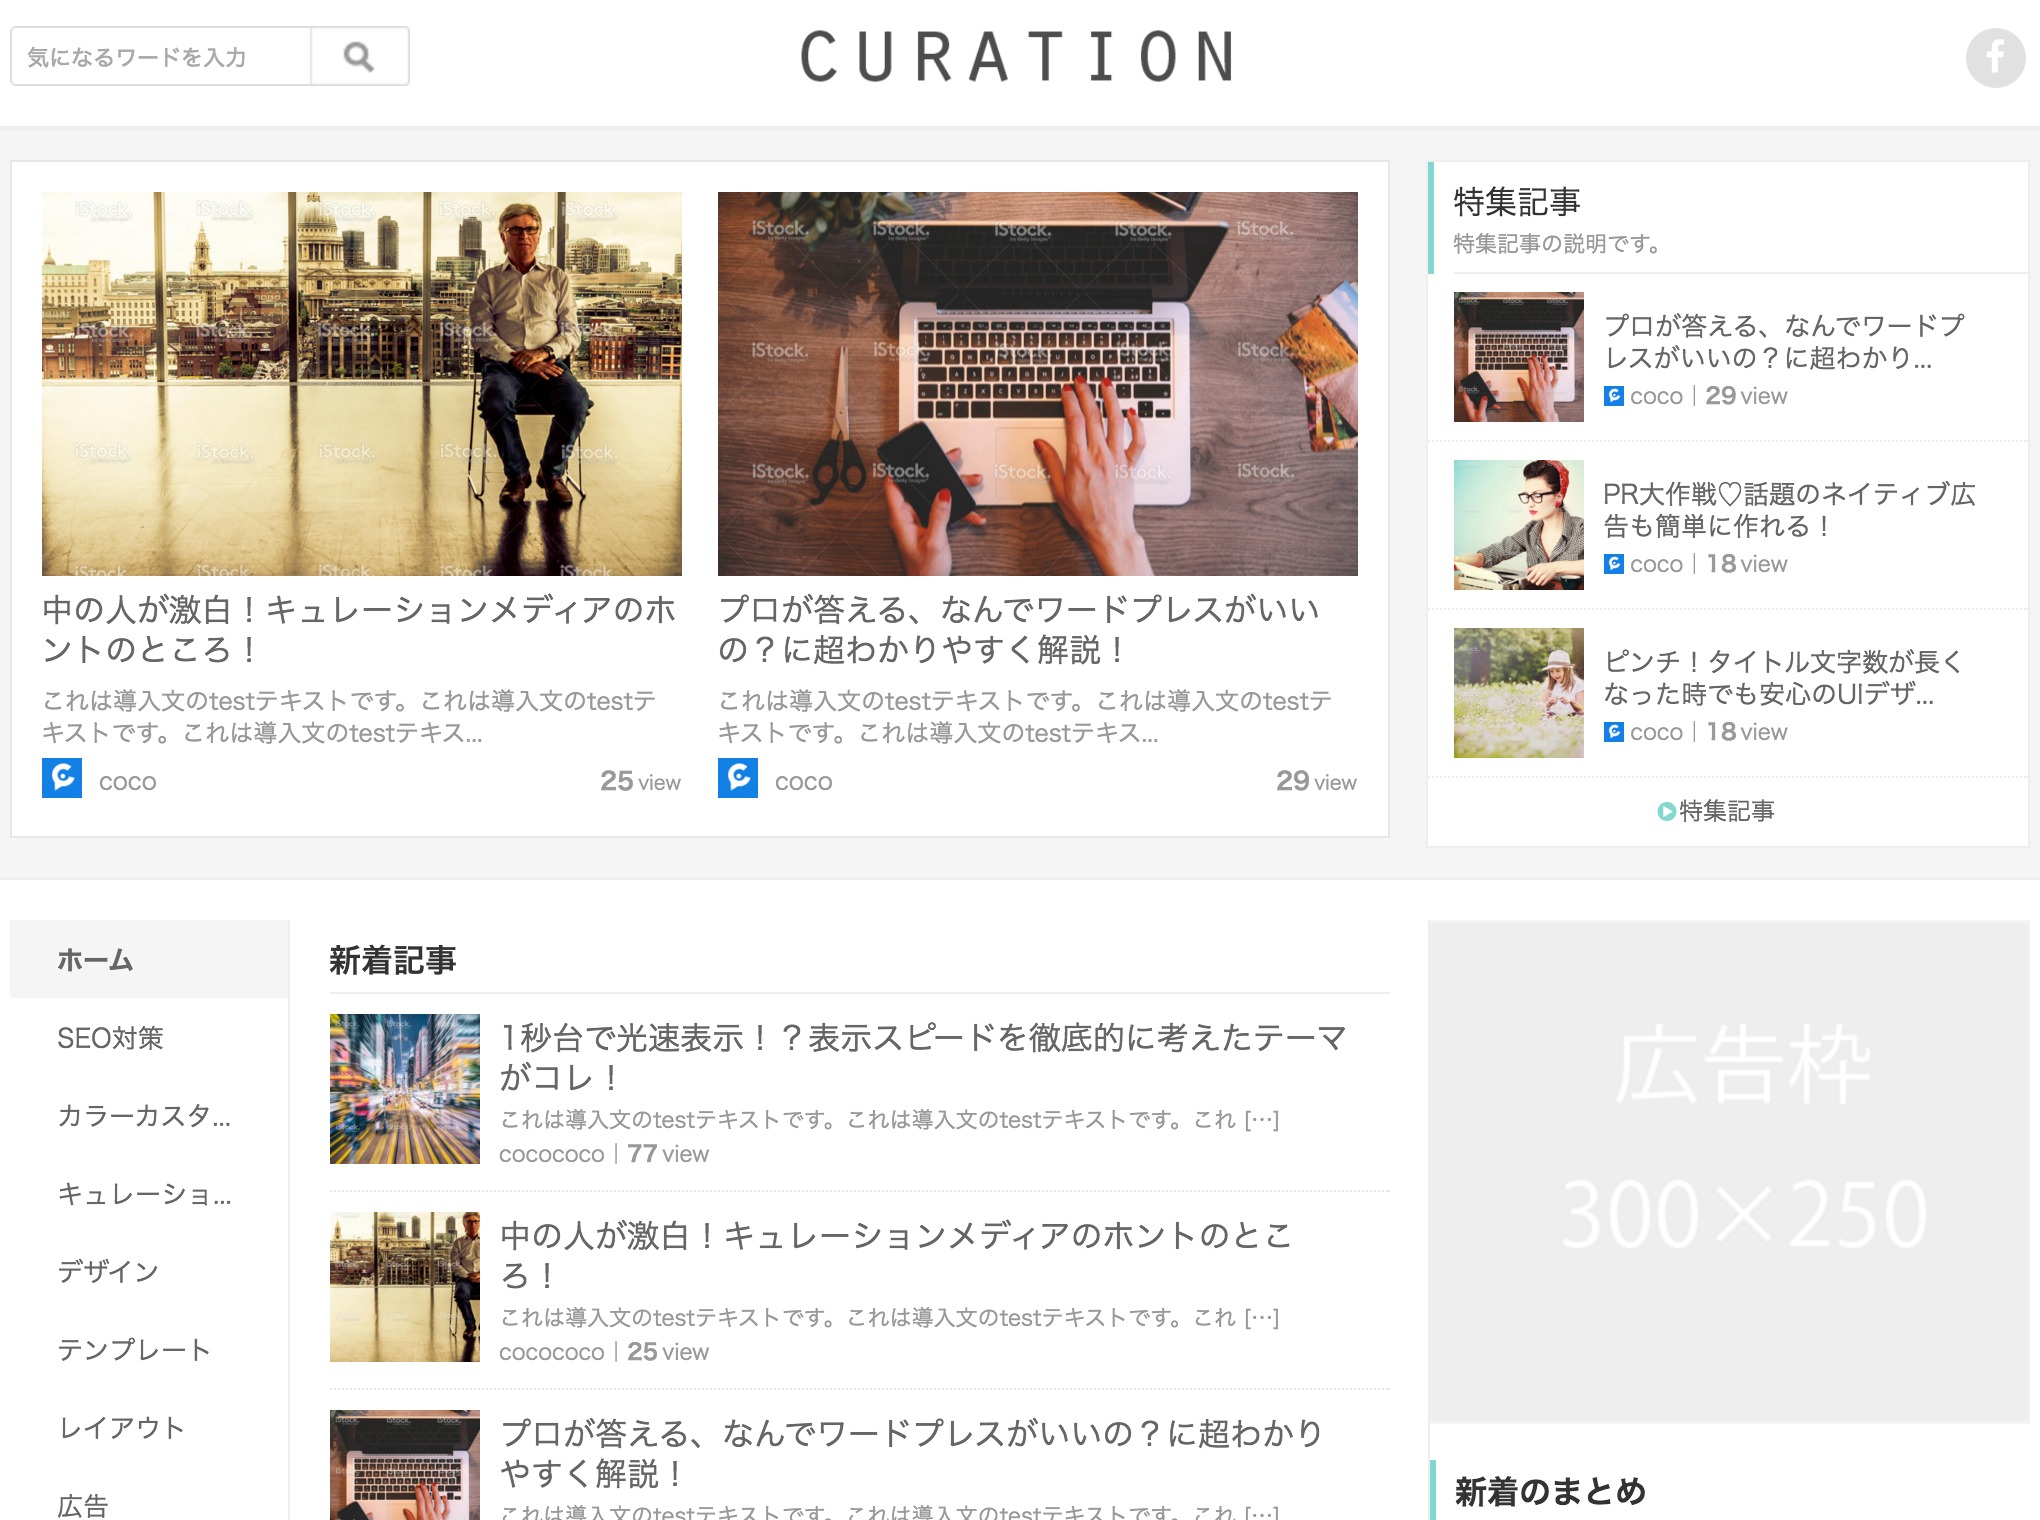 curation-media-wordpress-website-template-uen2-o.jpg